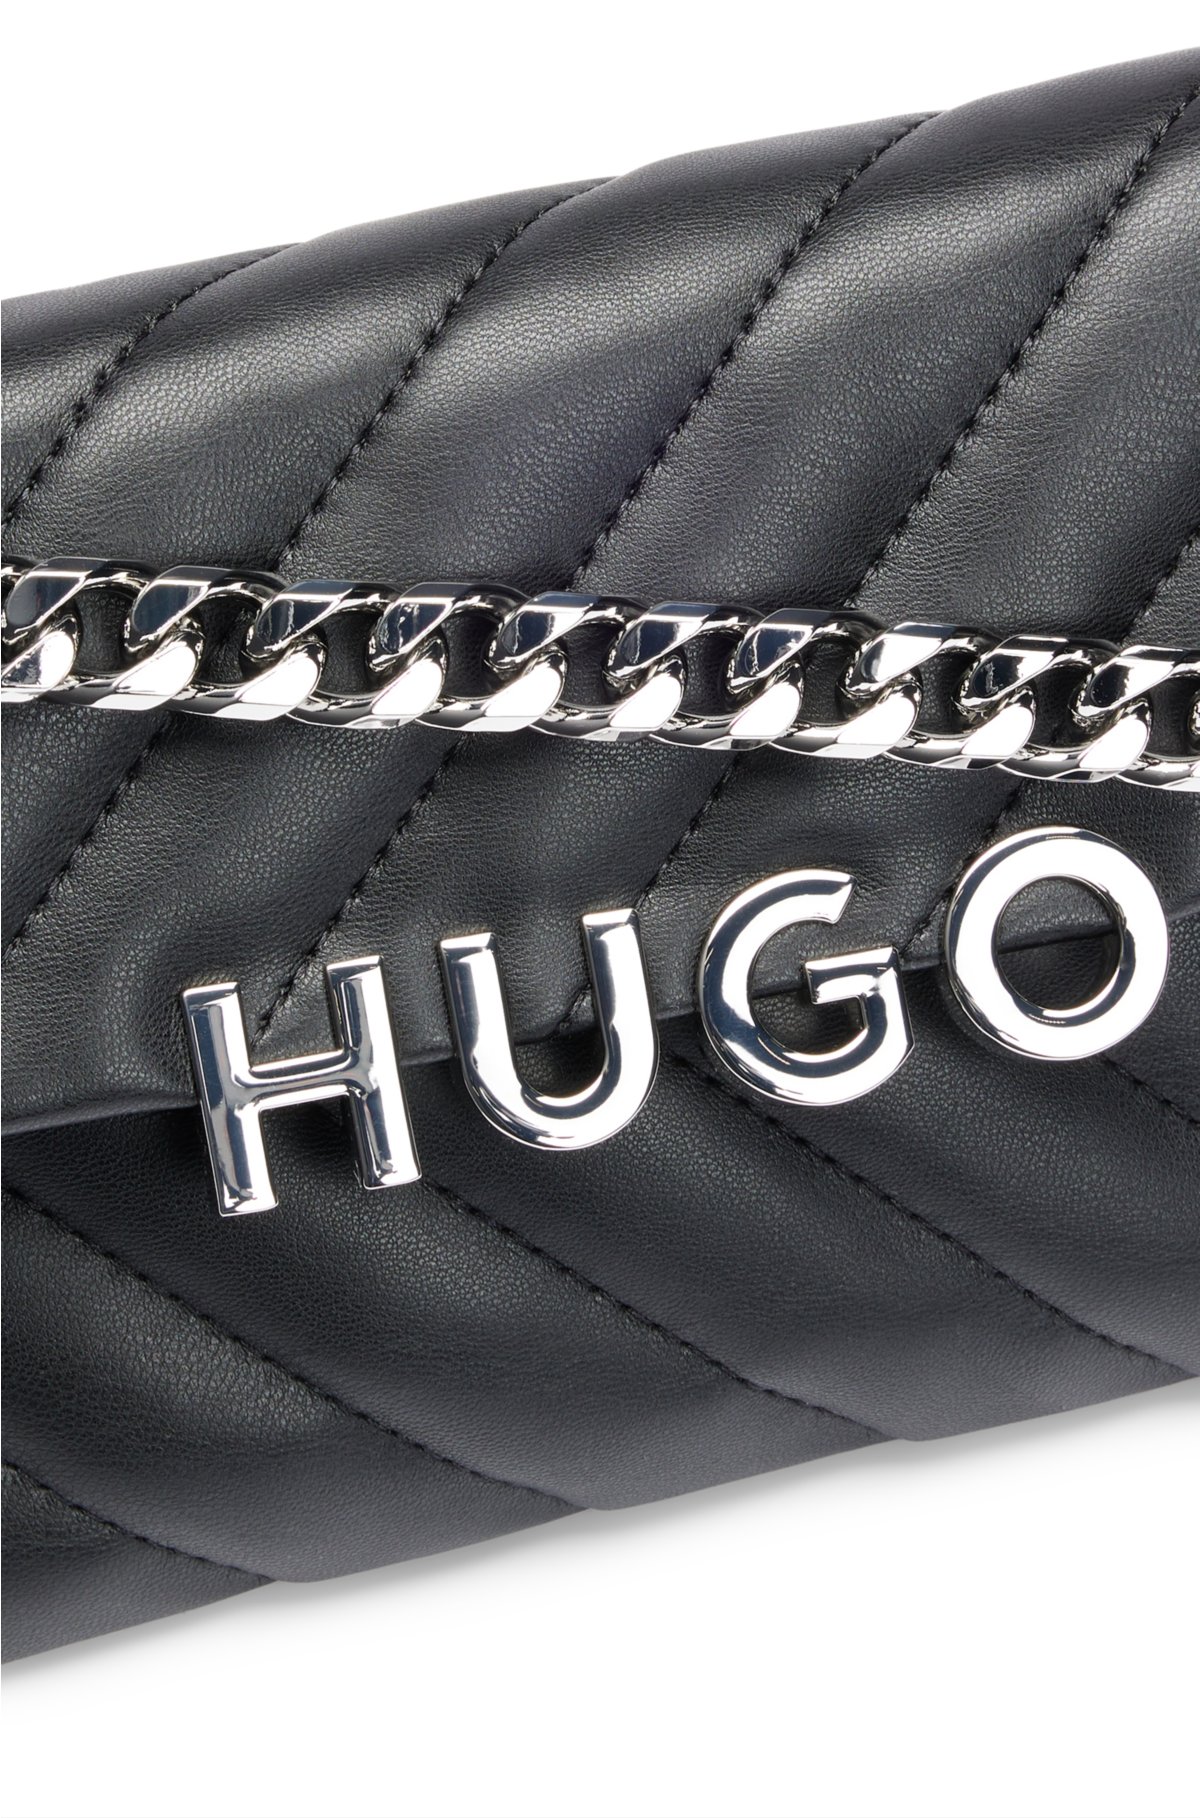 HUGO BOSS クラッチバッグ クラッチバック ハイブランド 値段交渉歓迎